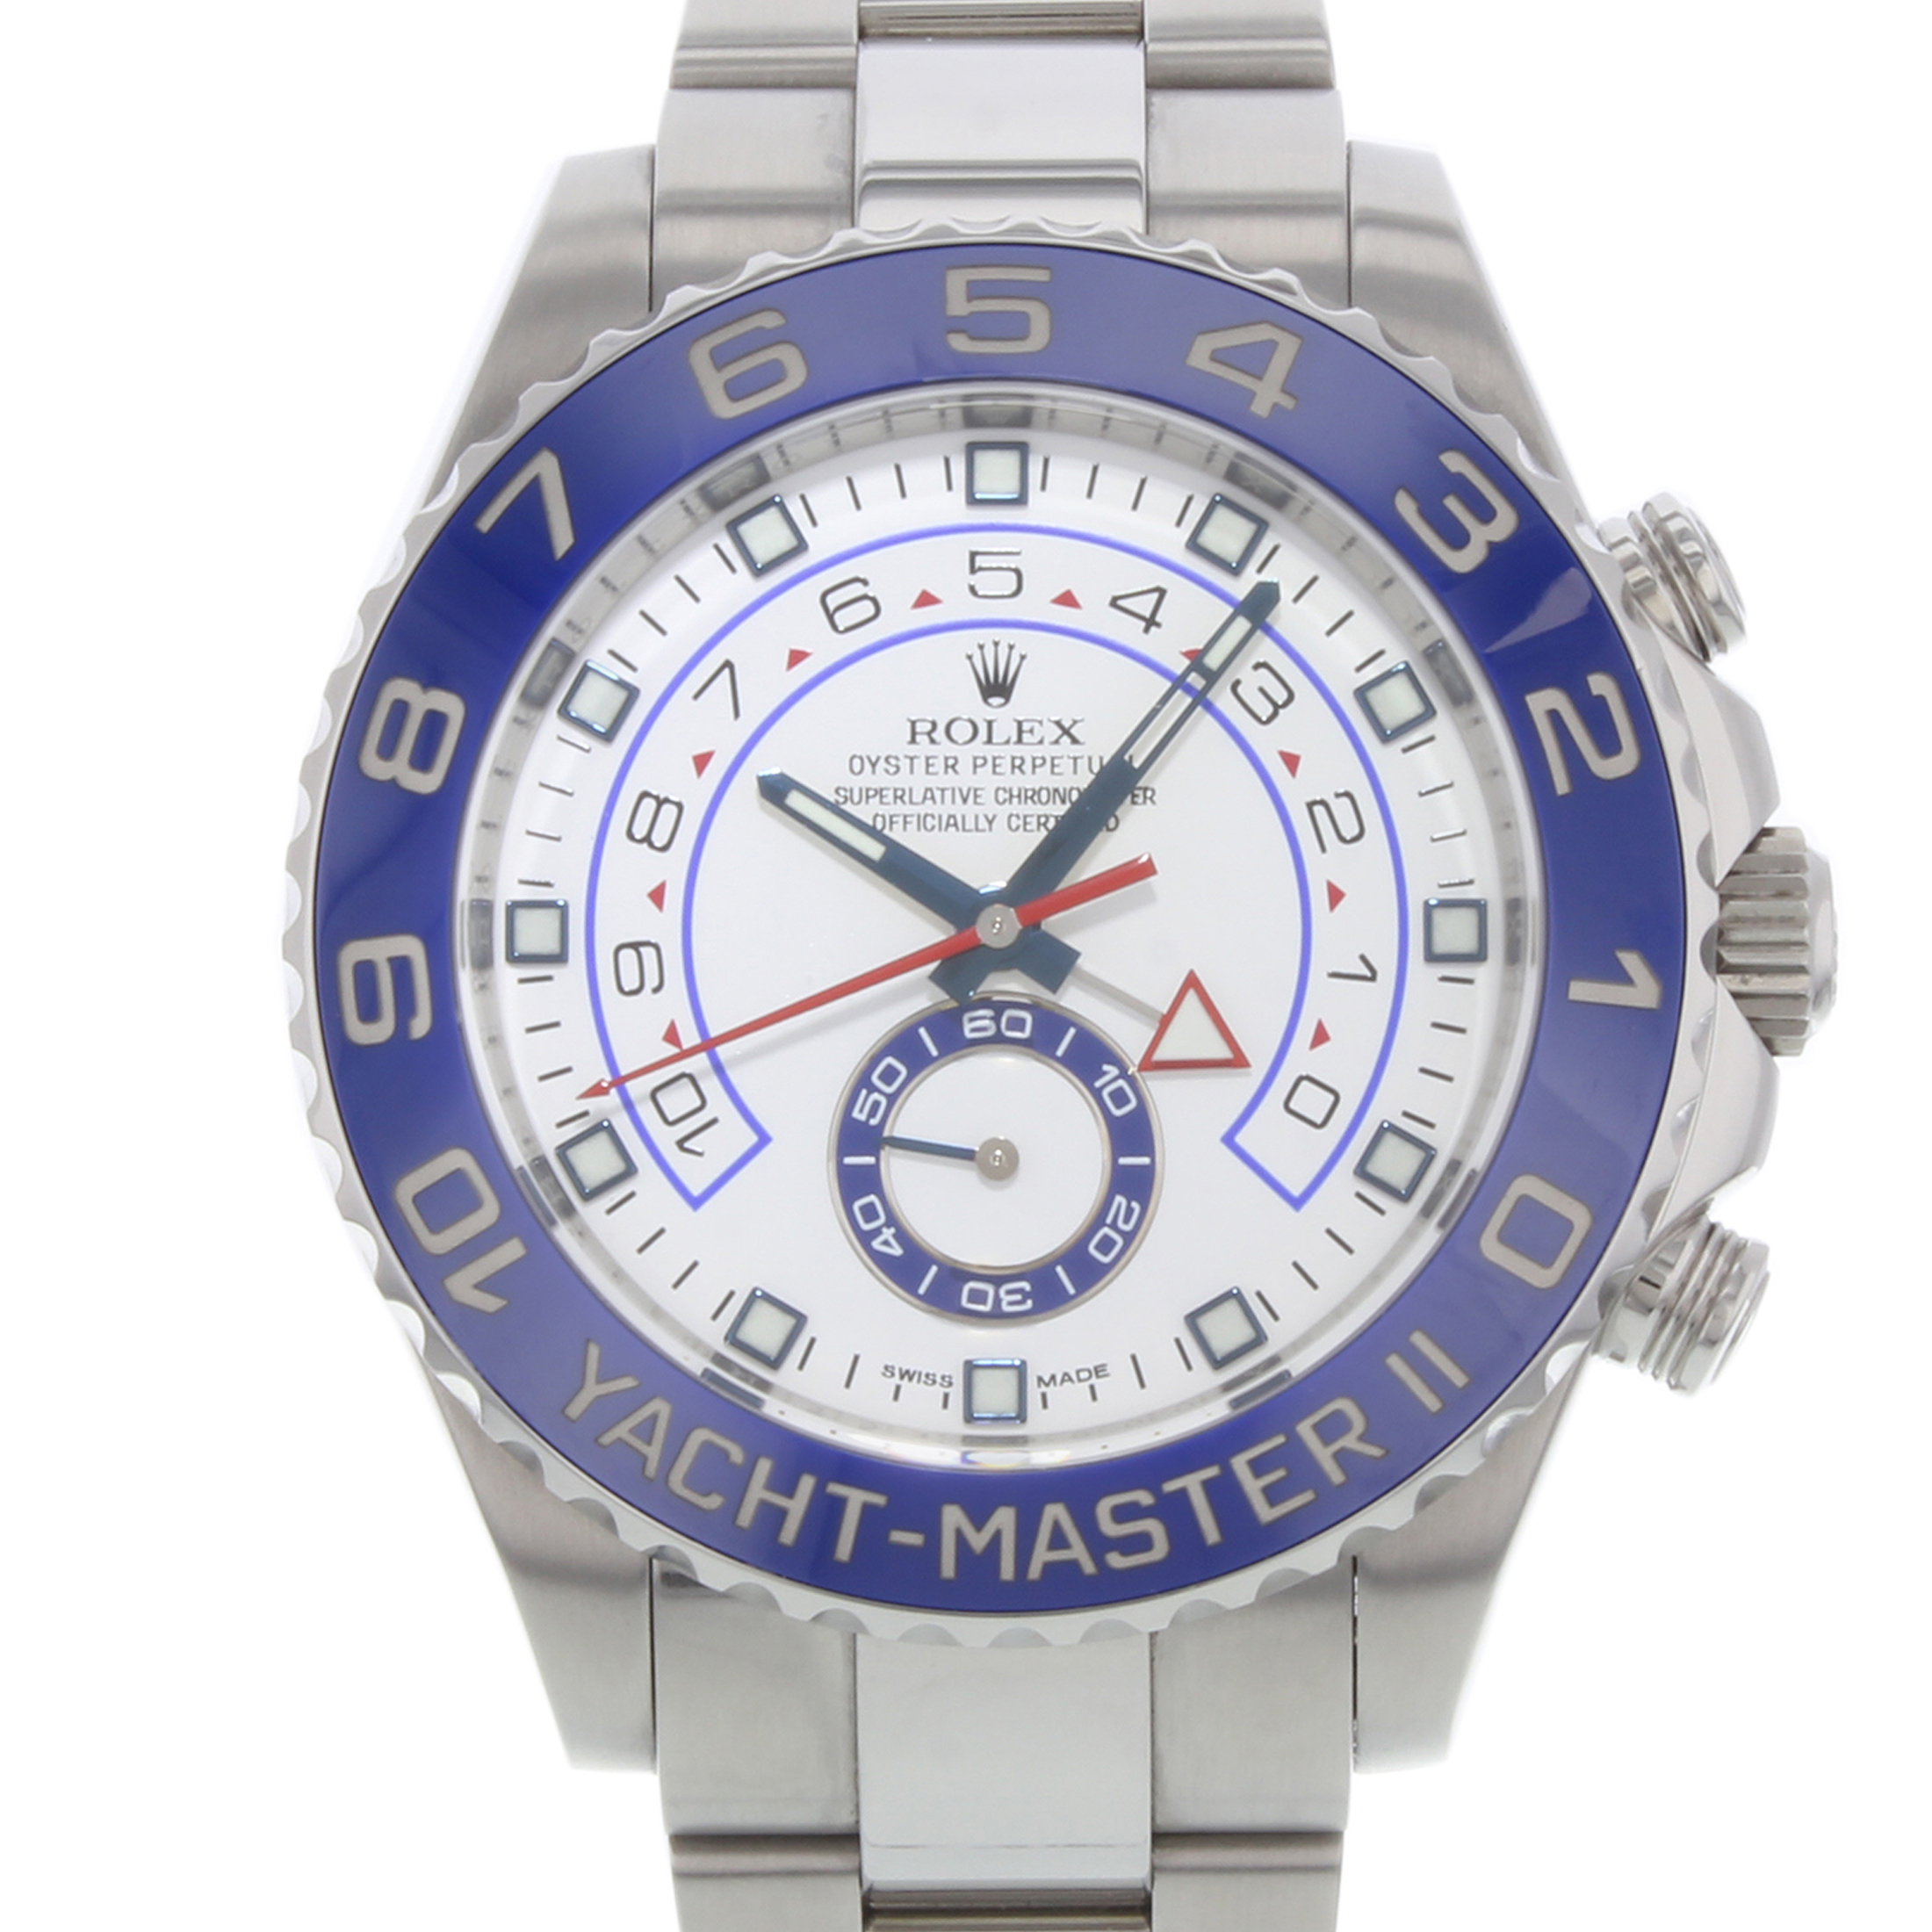 Rolex Yacht-Master II 116680 Stainless Steel Automatic Men's Watch | eBay